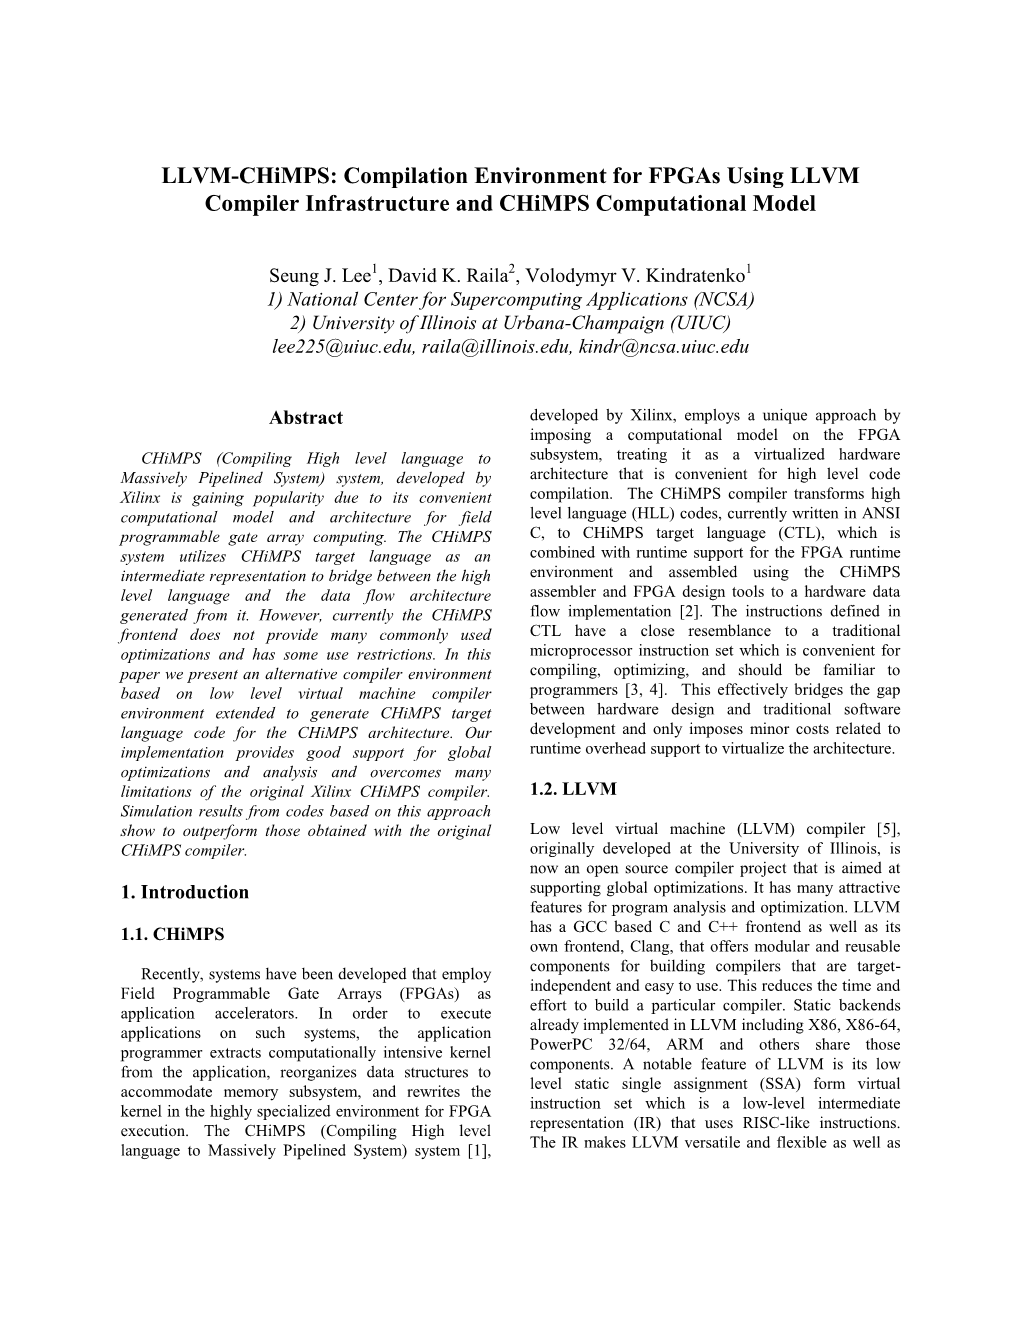 LLVM-Chimps: Compilation Environment for Fpgas Using LLVM Compiler Infrastructure and Chimps Computational Model